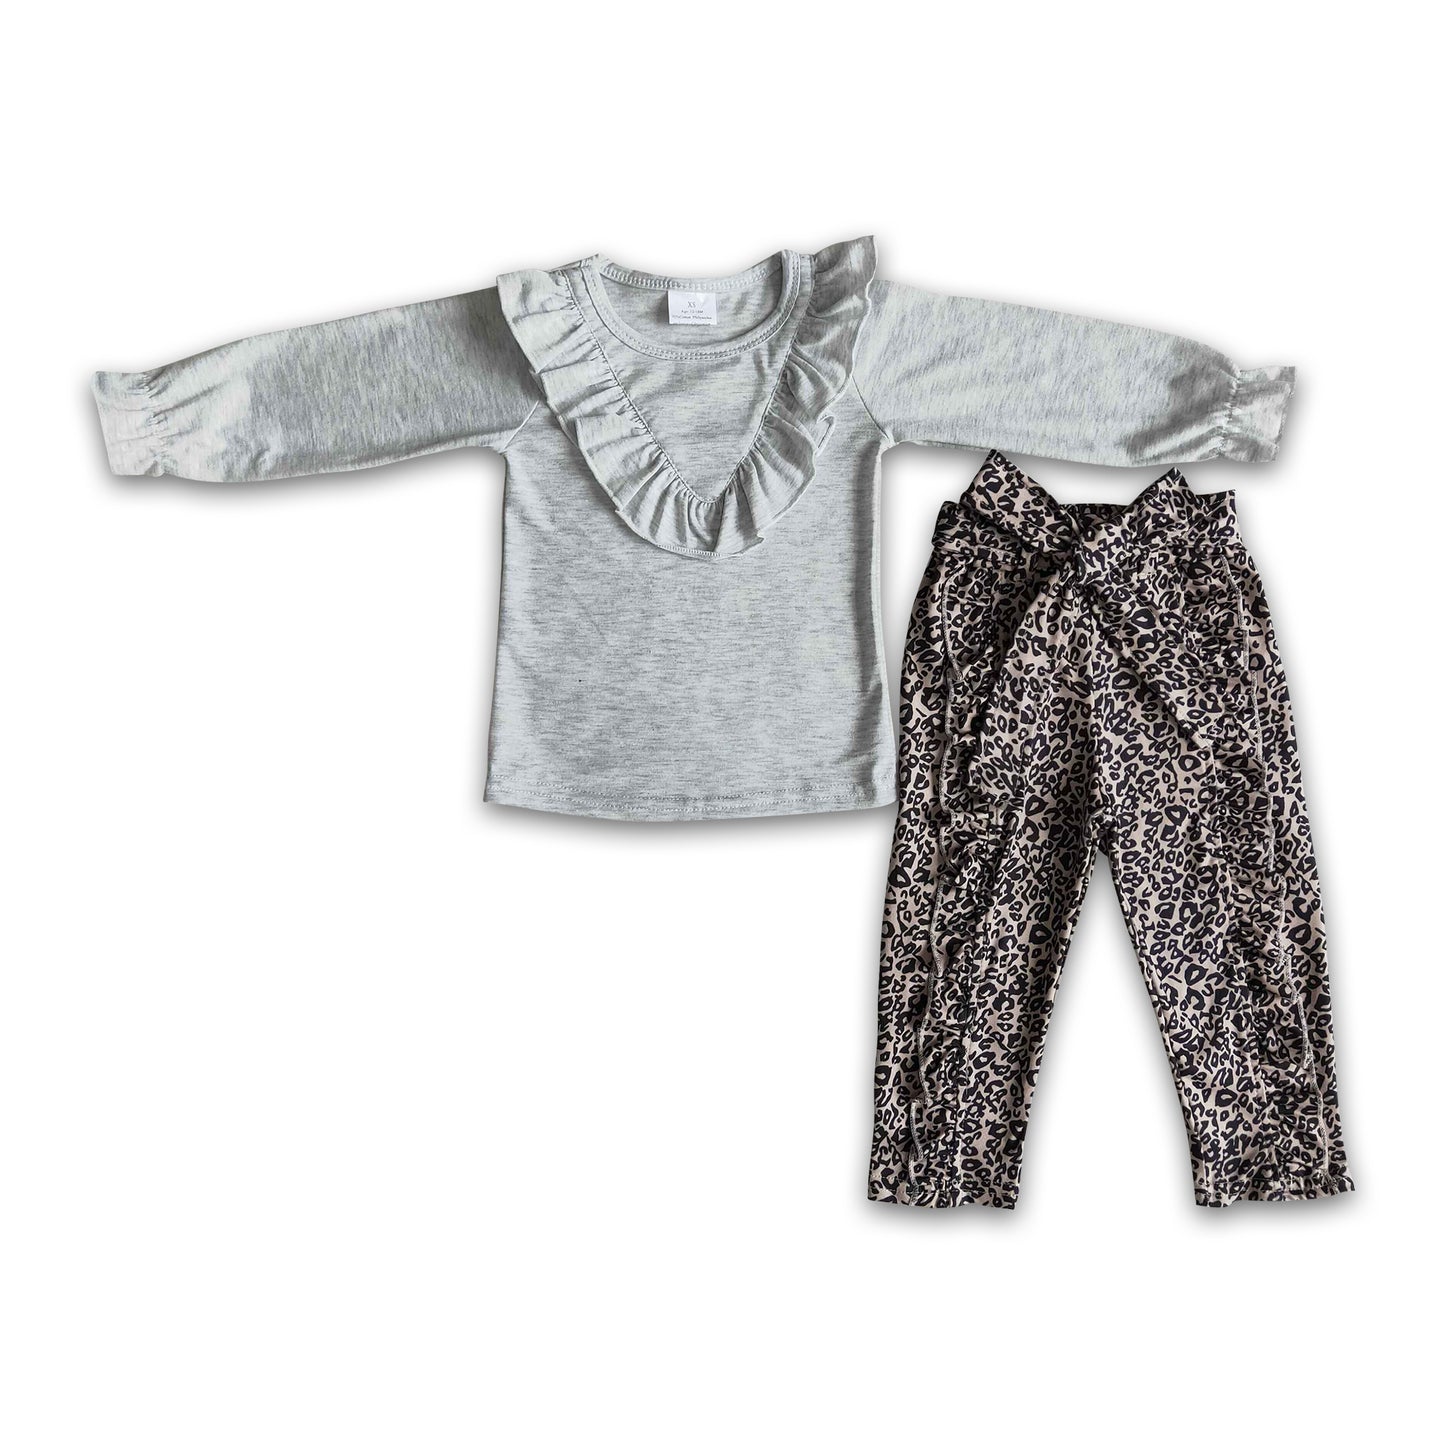 Grey long sleeve top leopard pants cute baby girls clothing sets